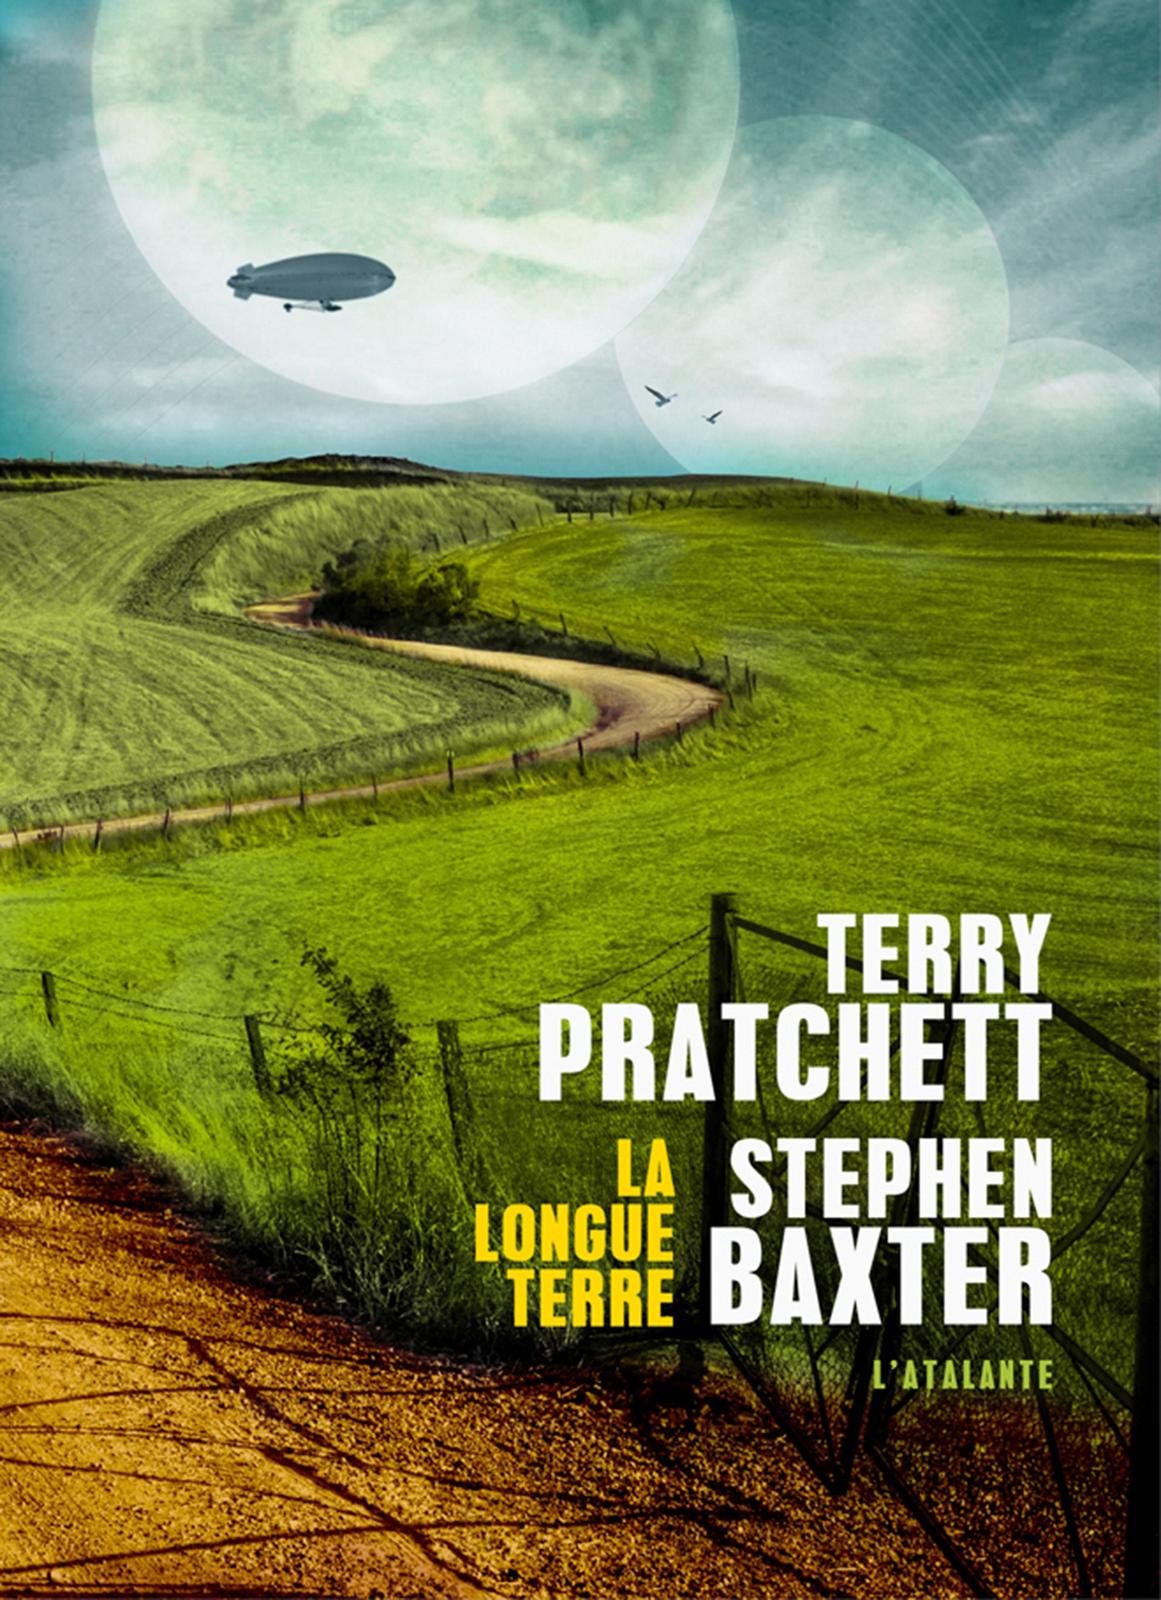 Terry Pratchett, Stephen Baxter: La longue terre (French language, 2013)